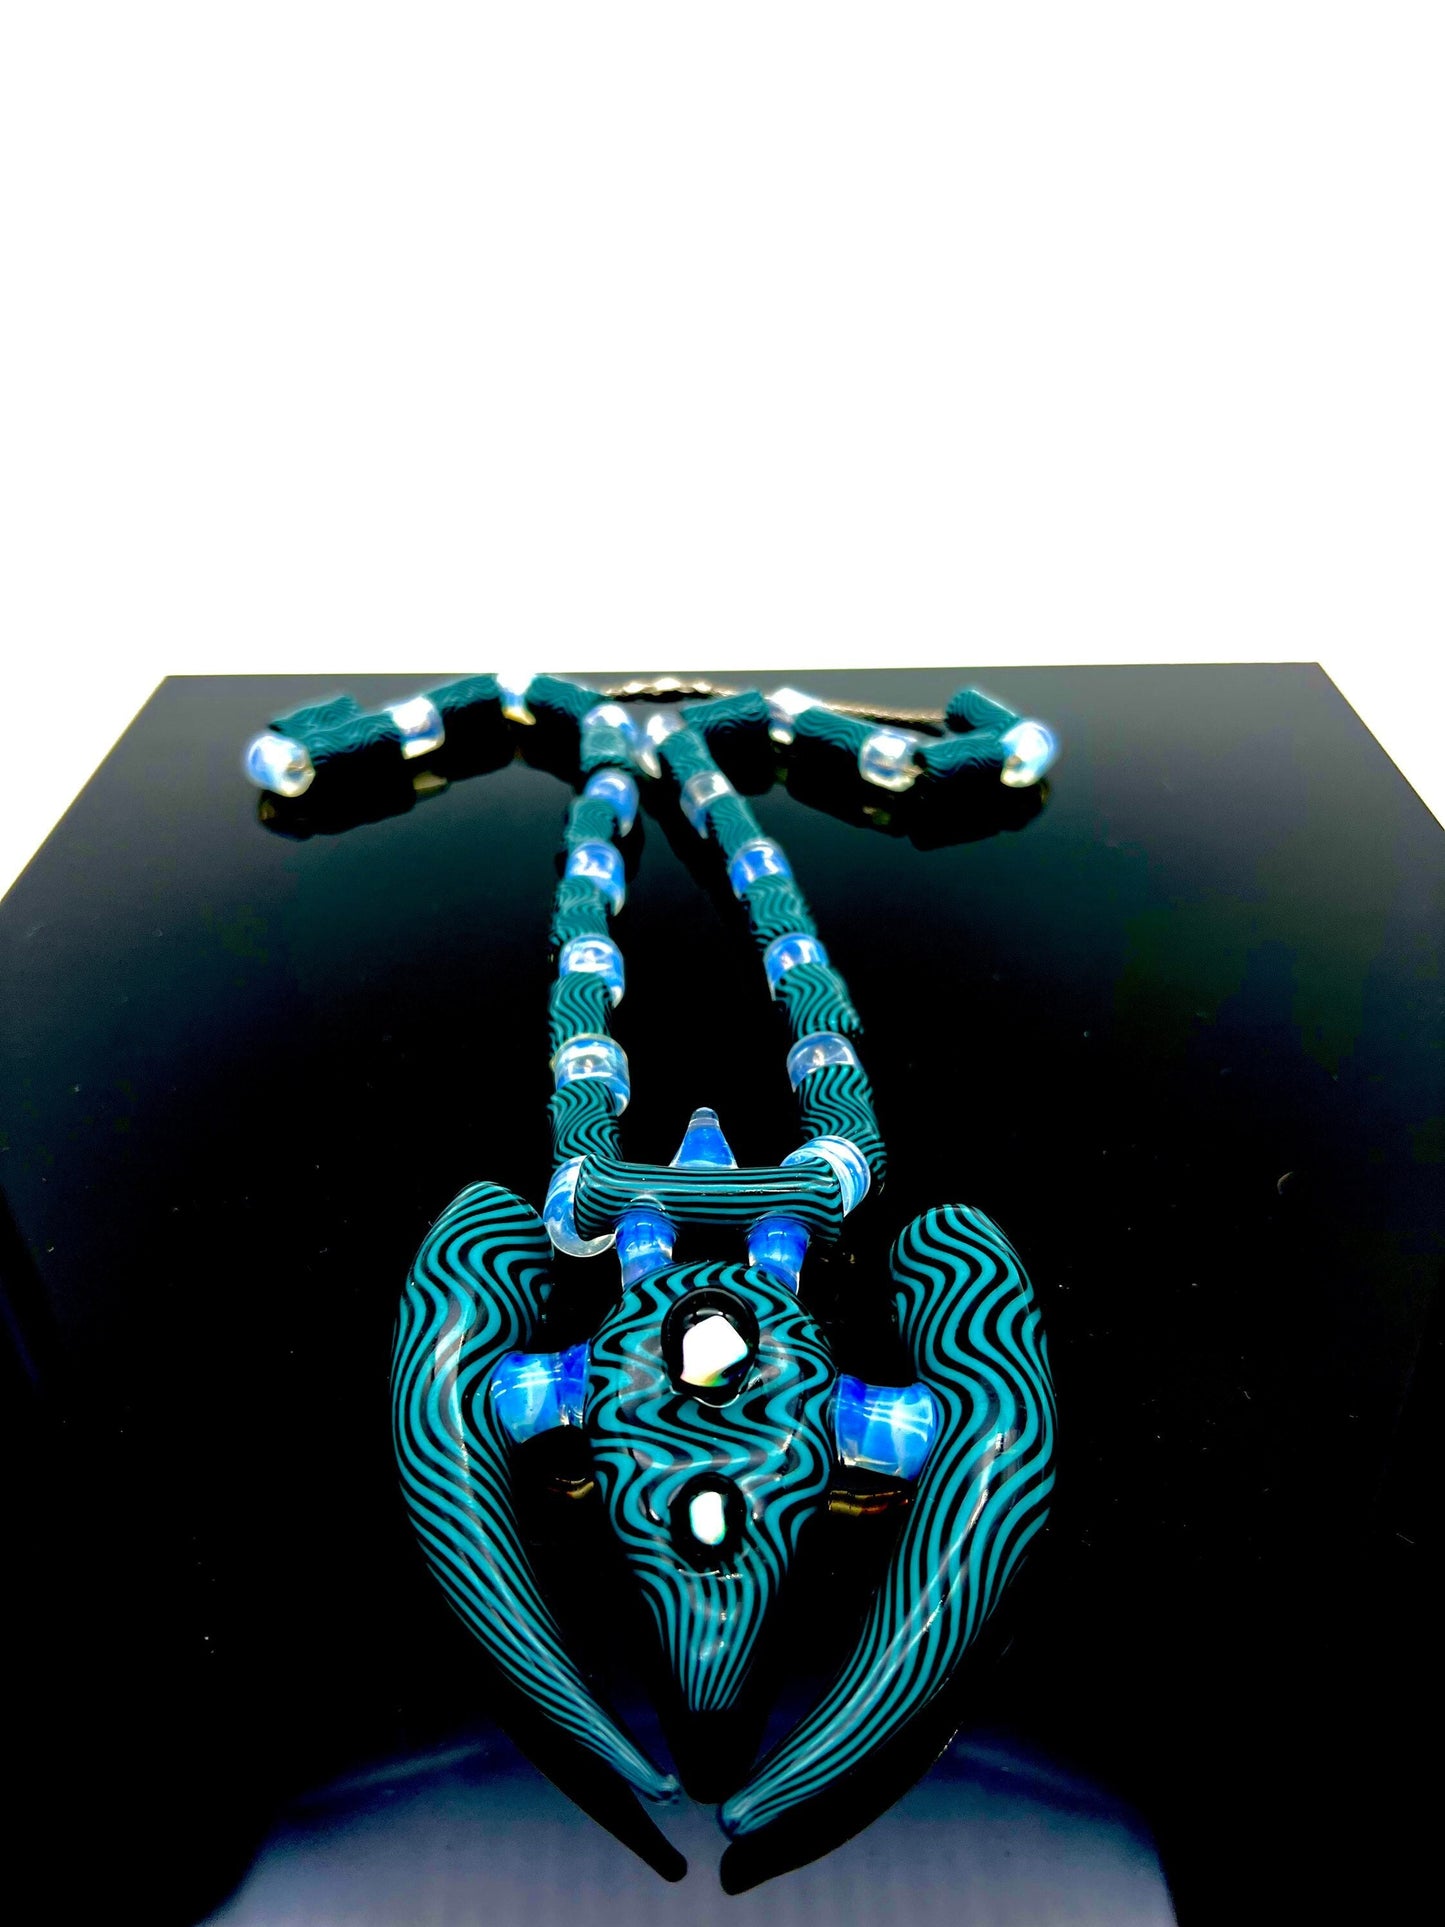 Handmade Heady AquaBird Aqua Blue and Black WigWag with Ghost Accents Full Bead Jewelry Pendant Interstellar Set #2 with Centerpiece